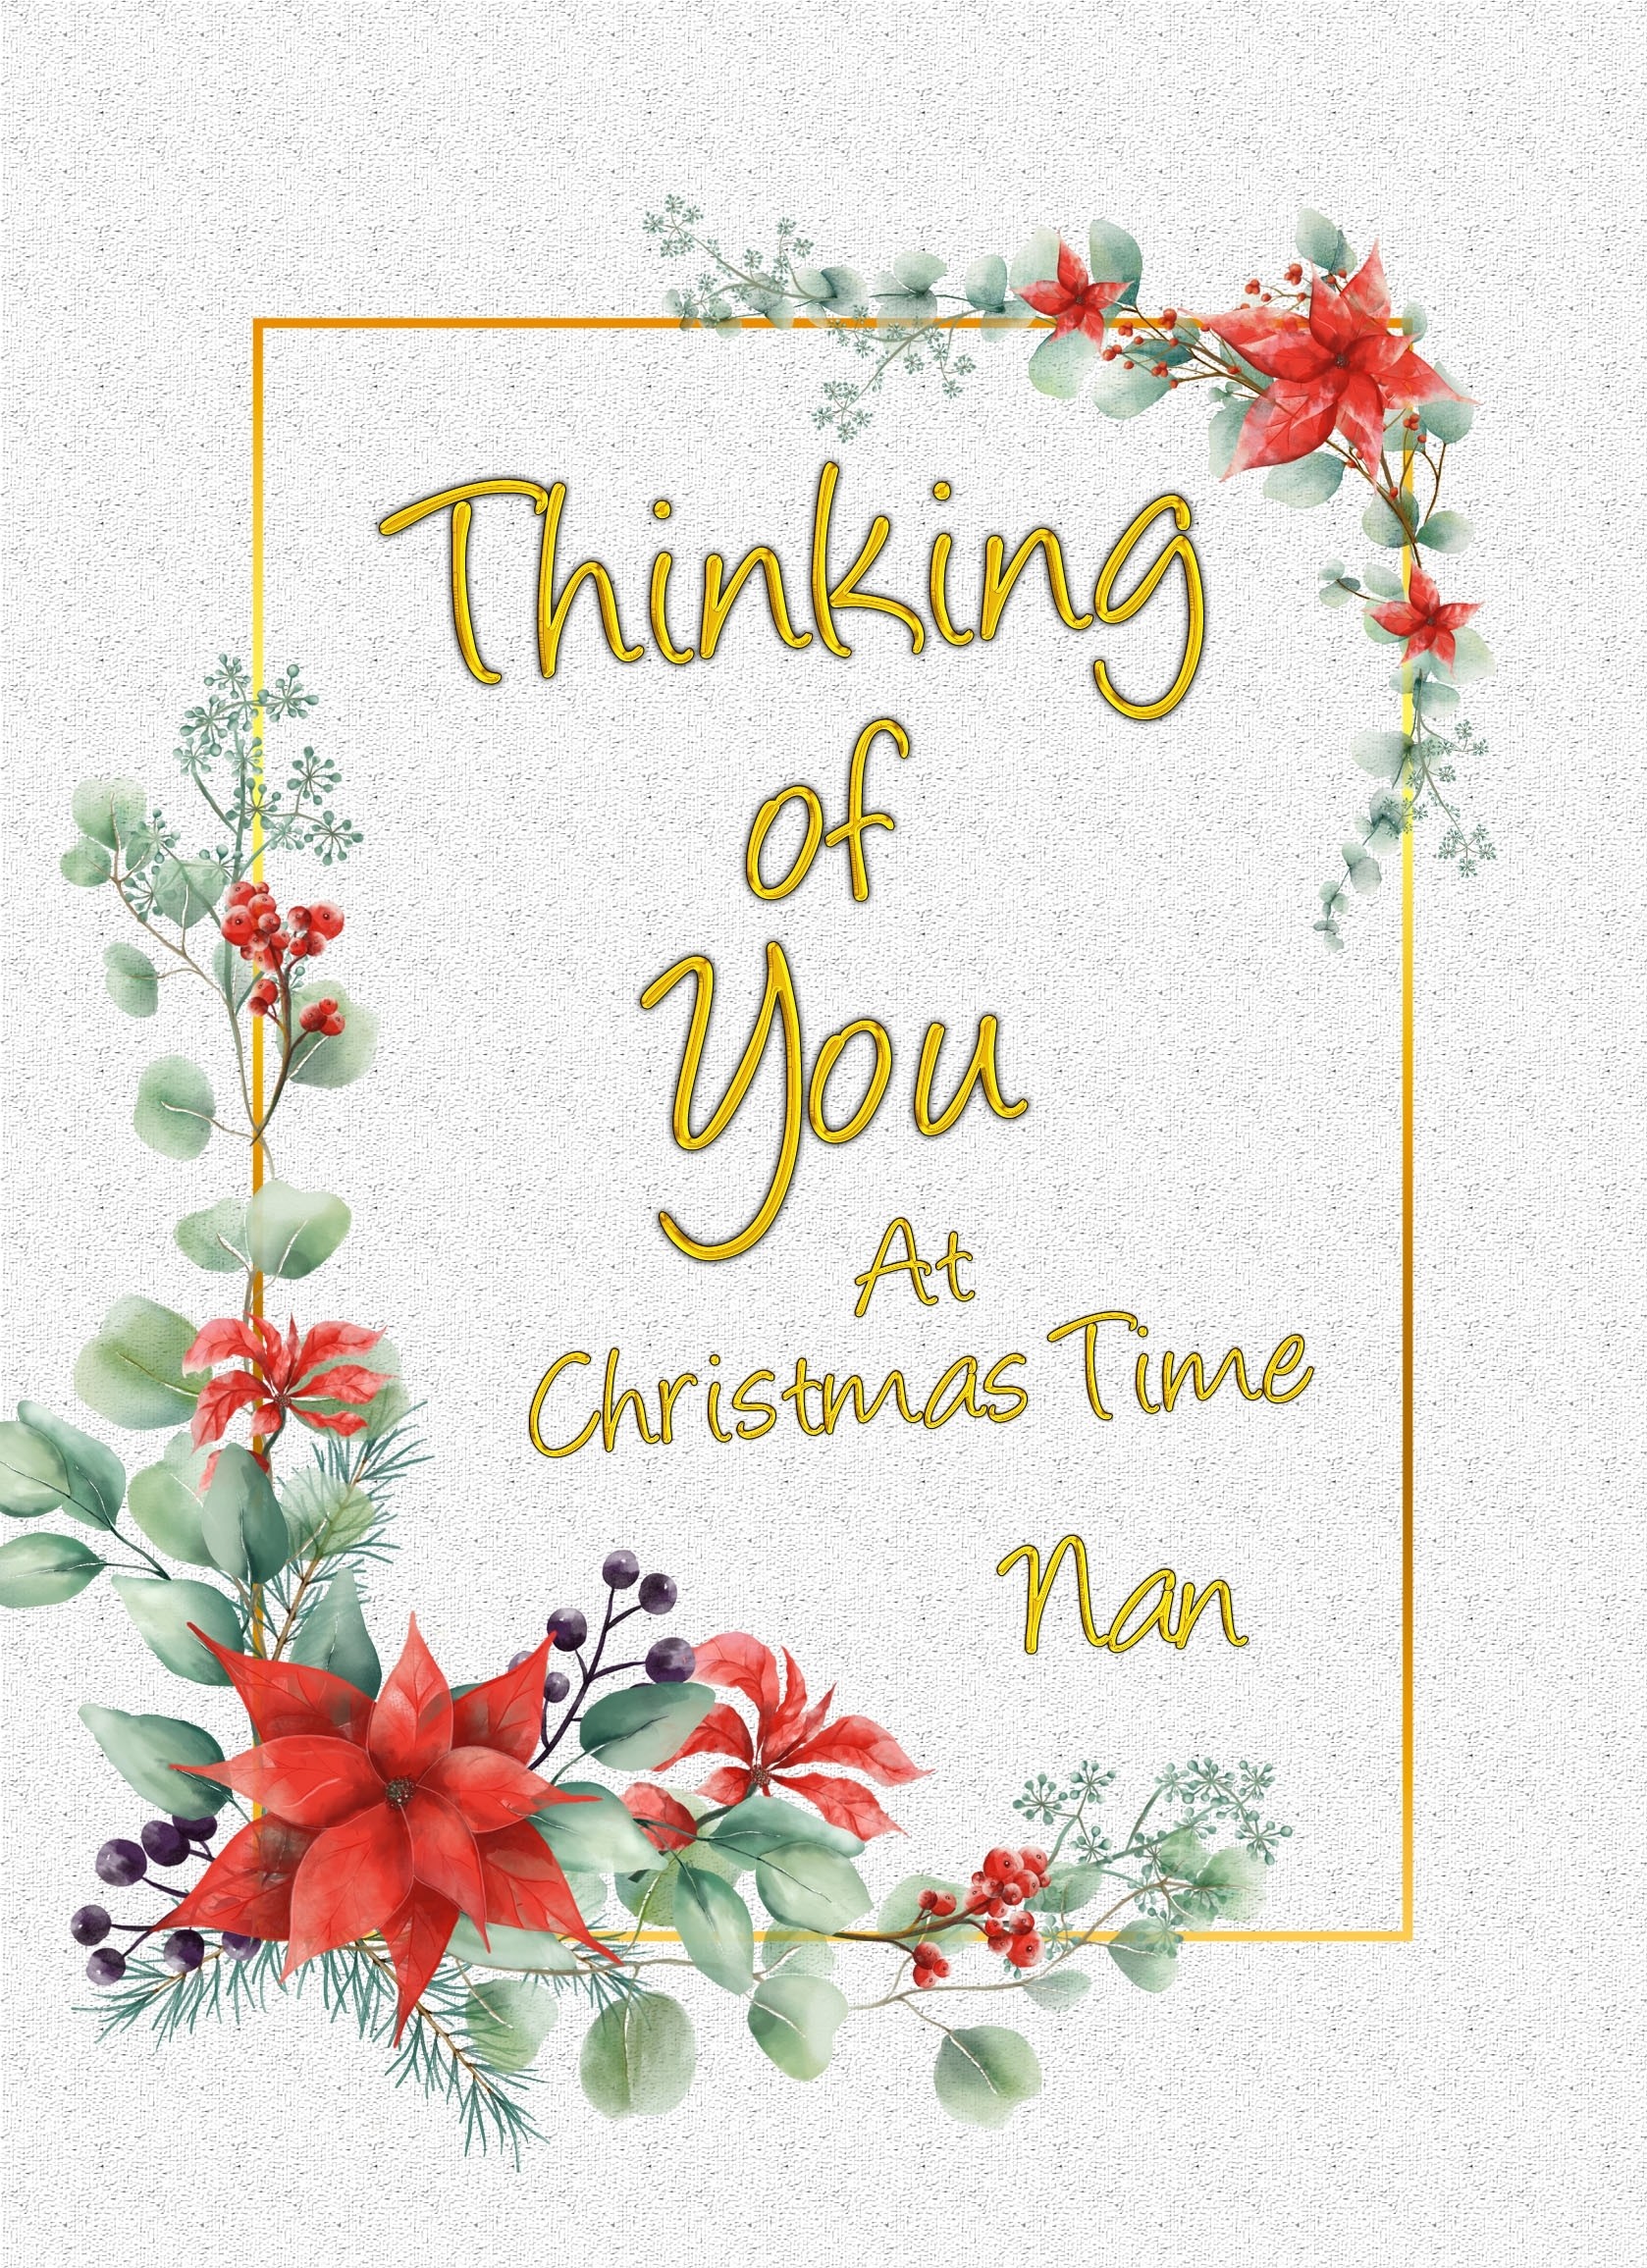 Thinking of You at Christmas Card For Nan